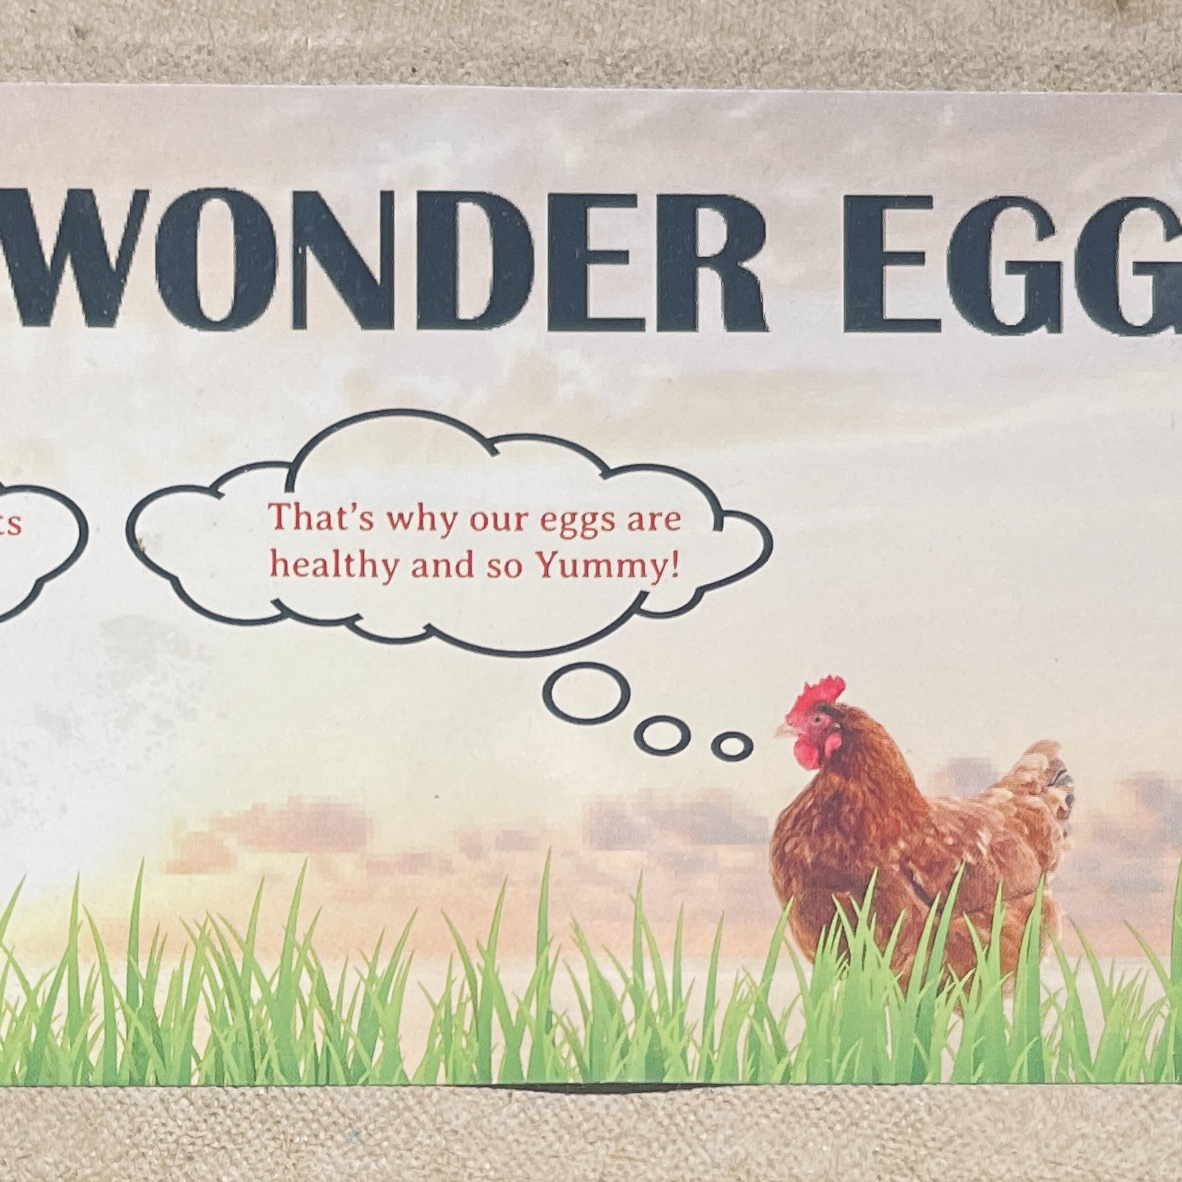 The Wonder Egg (Certified Organic)